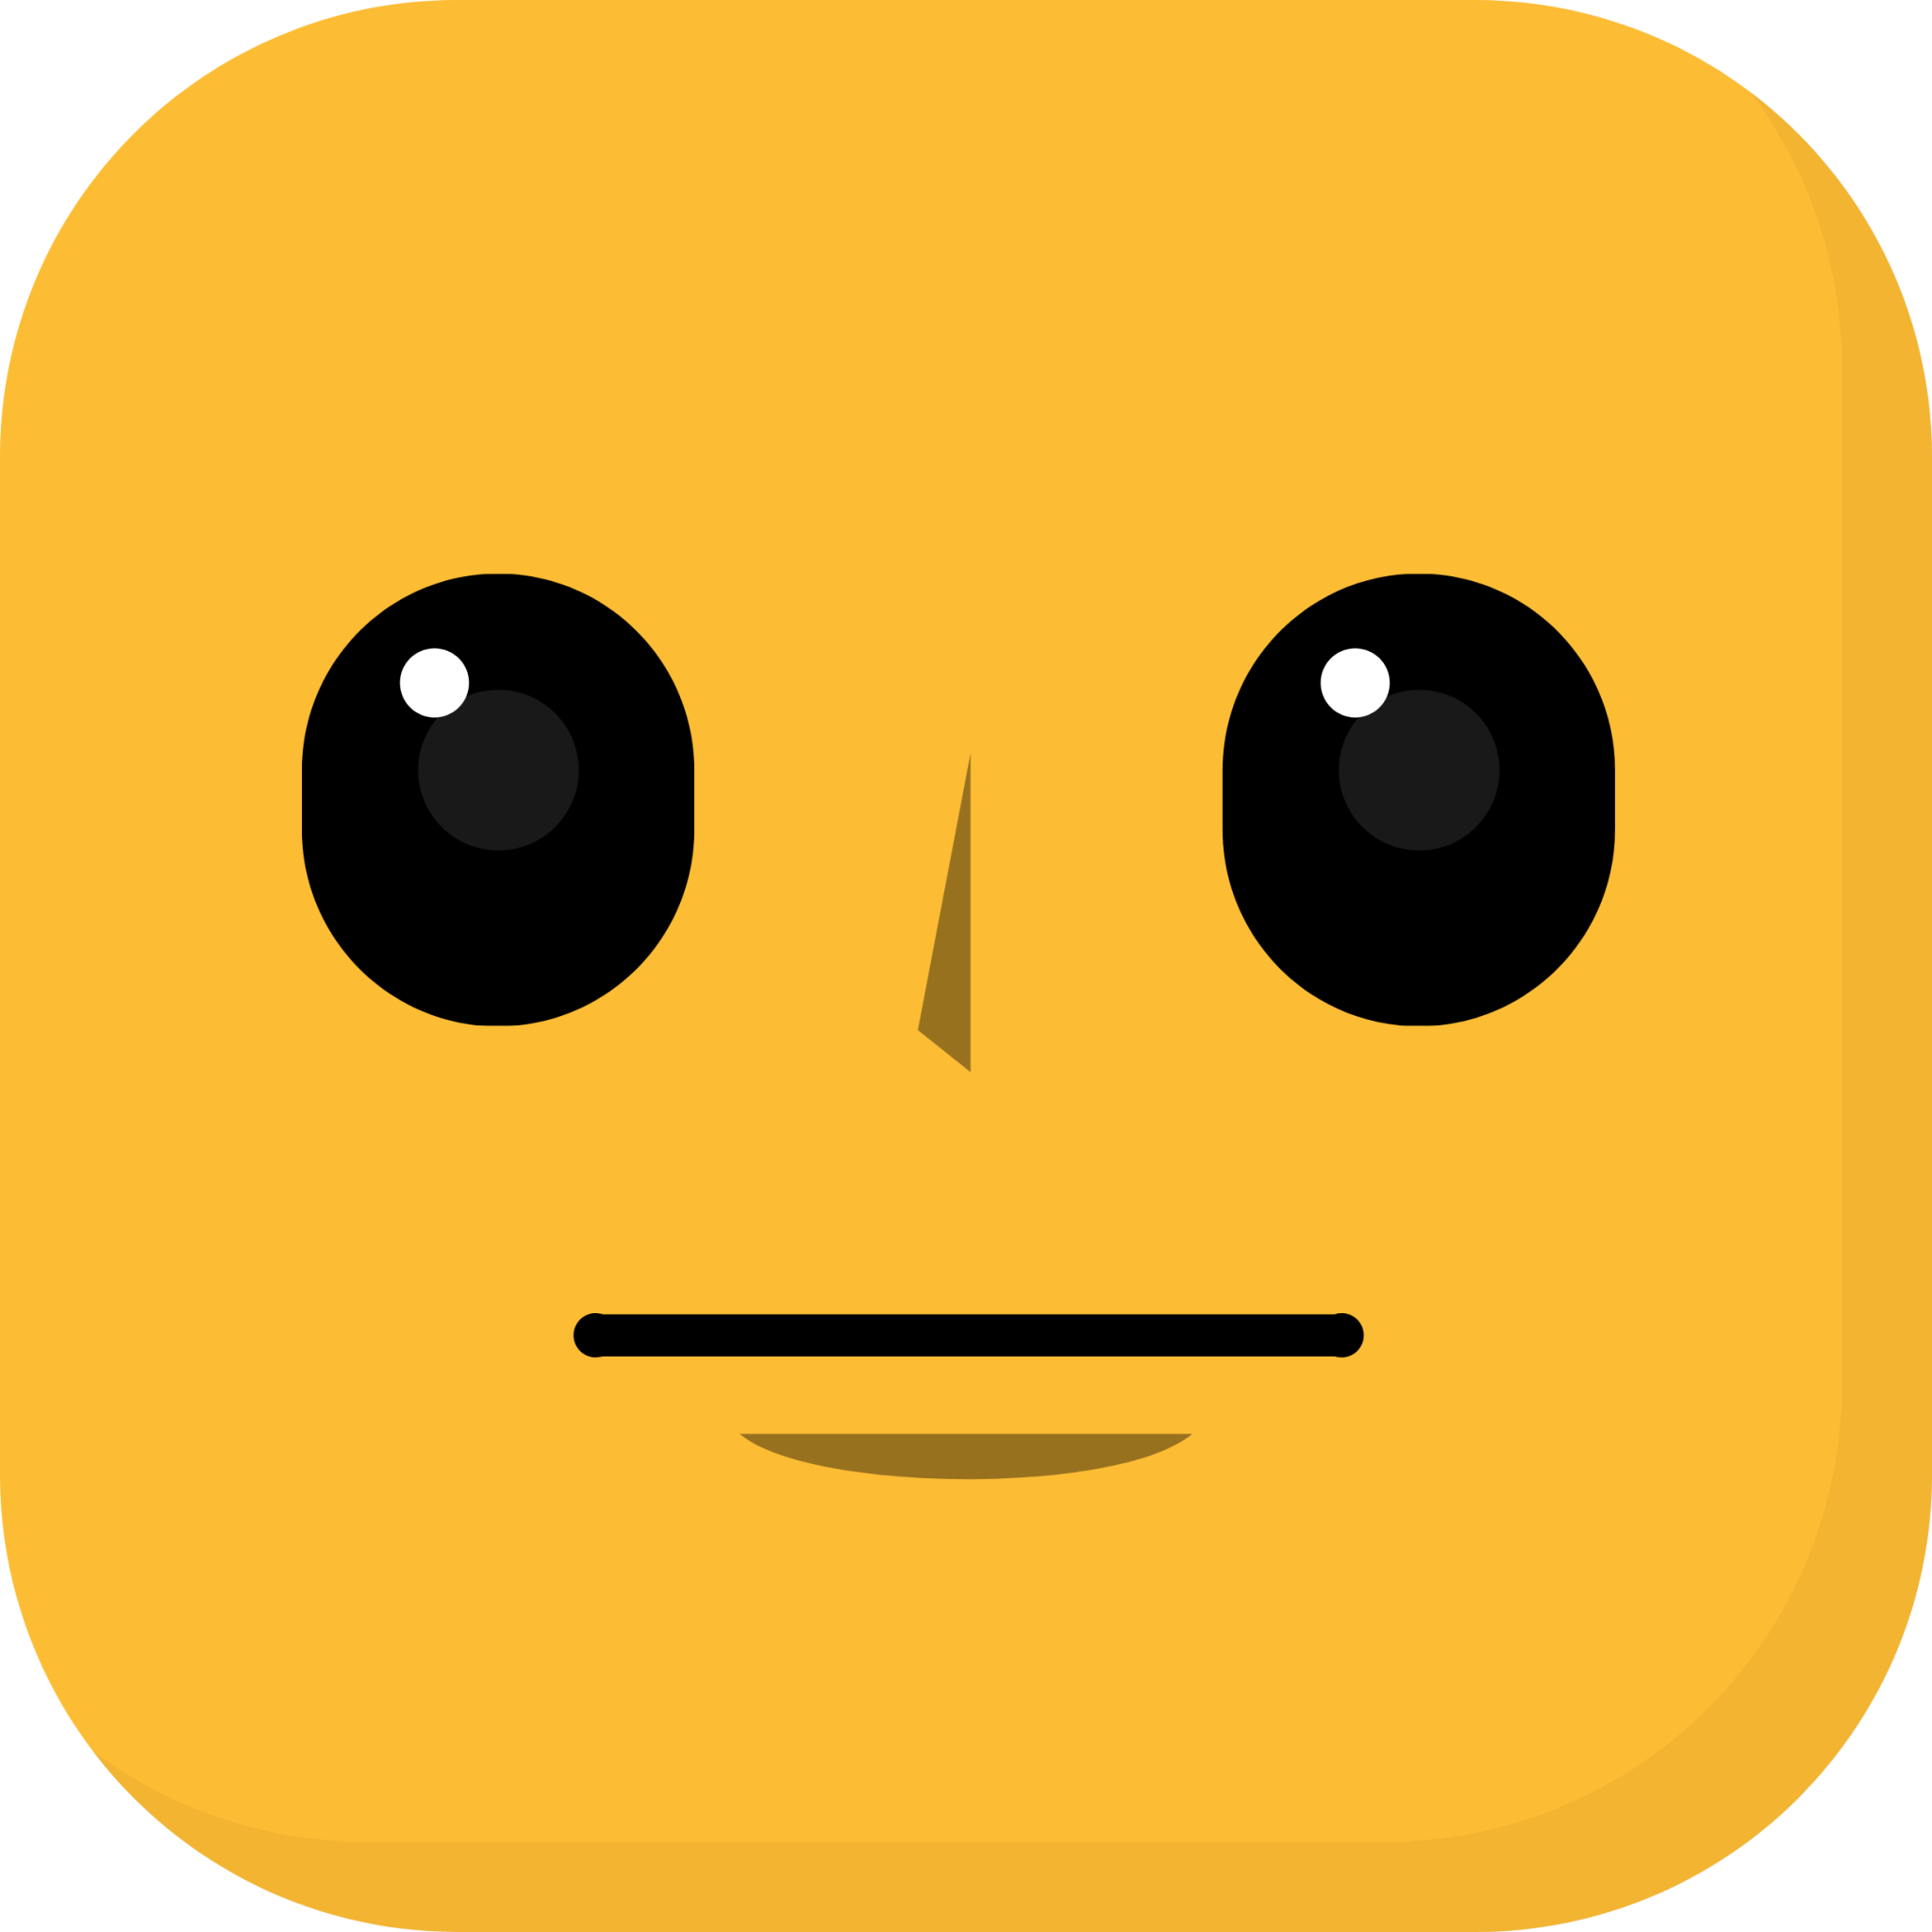 straight face emoji